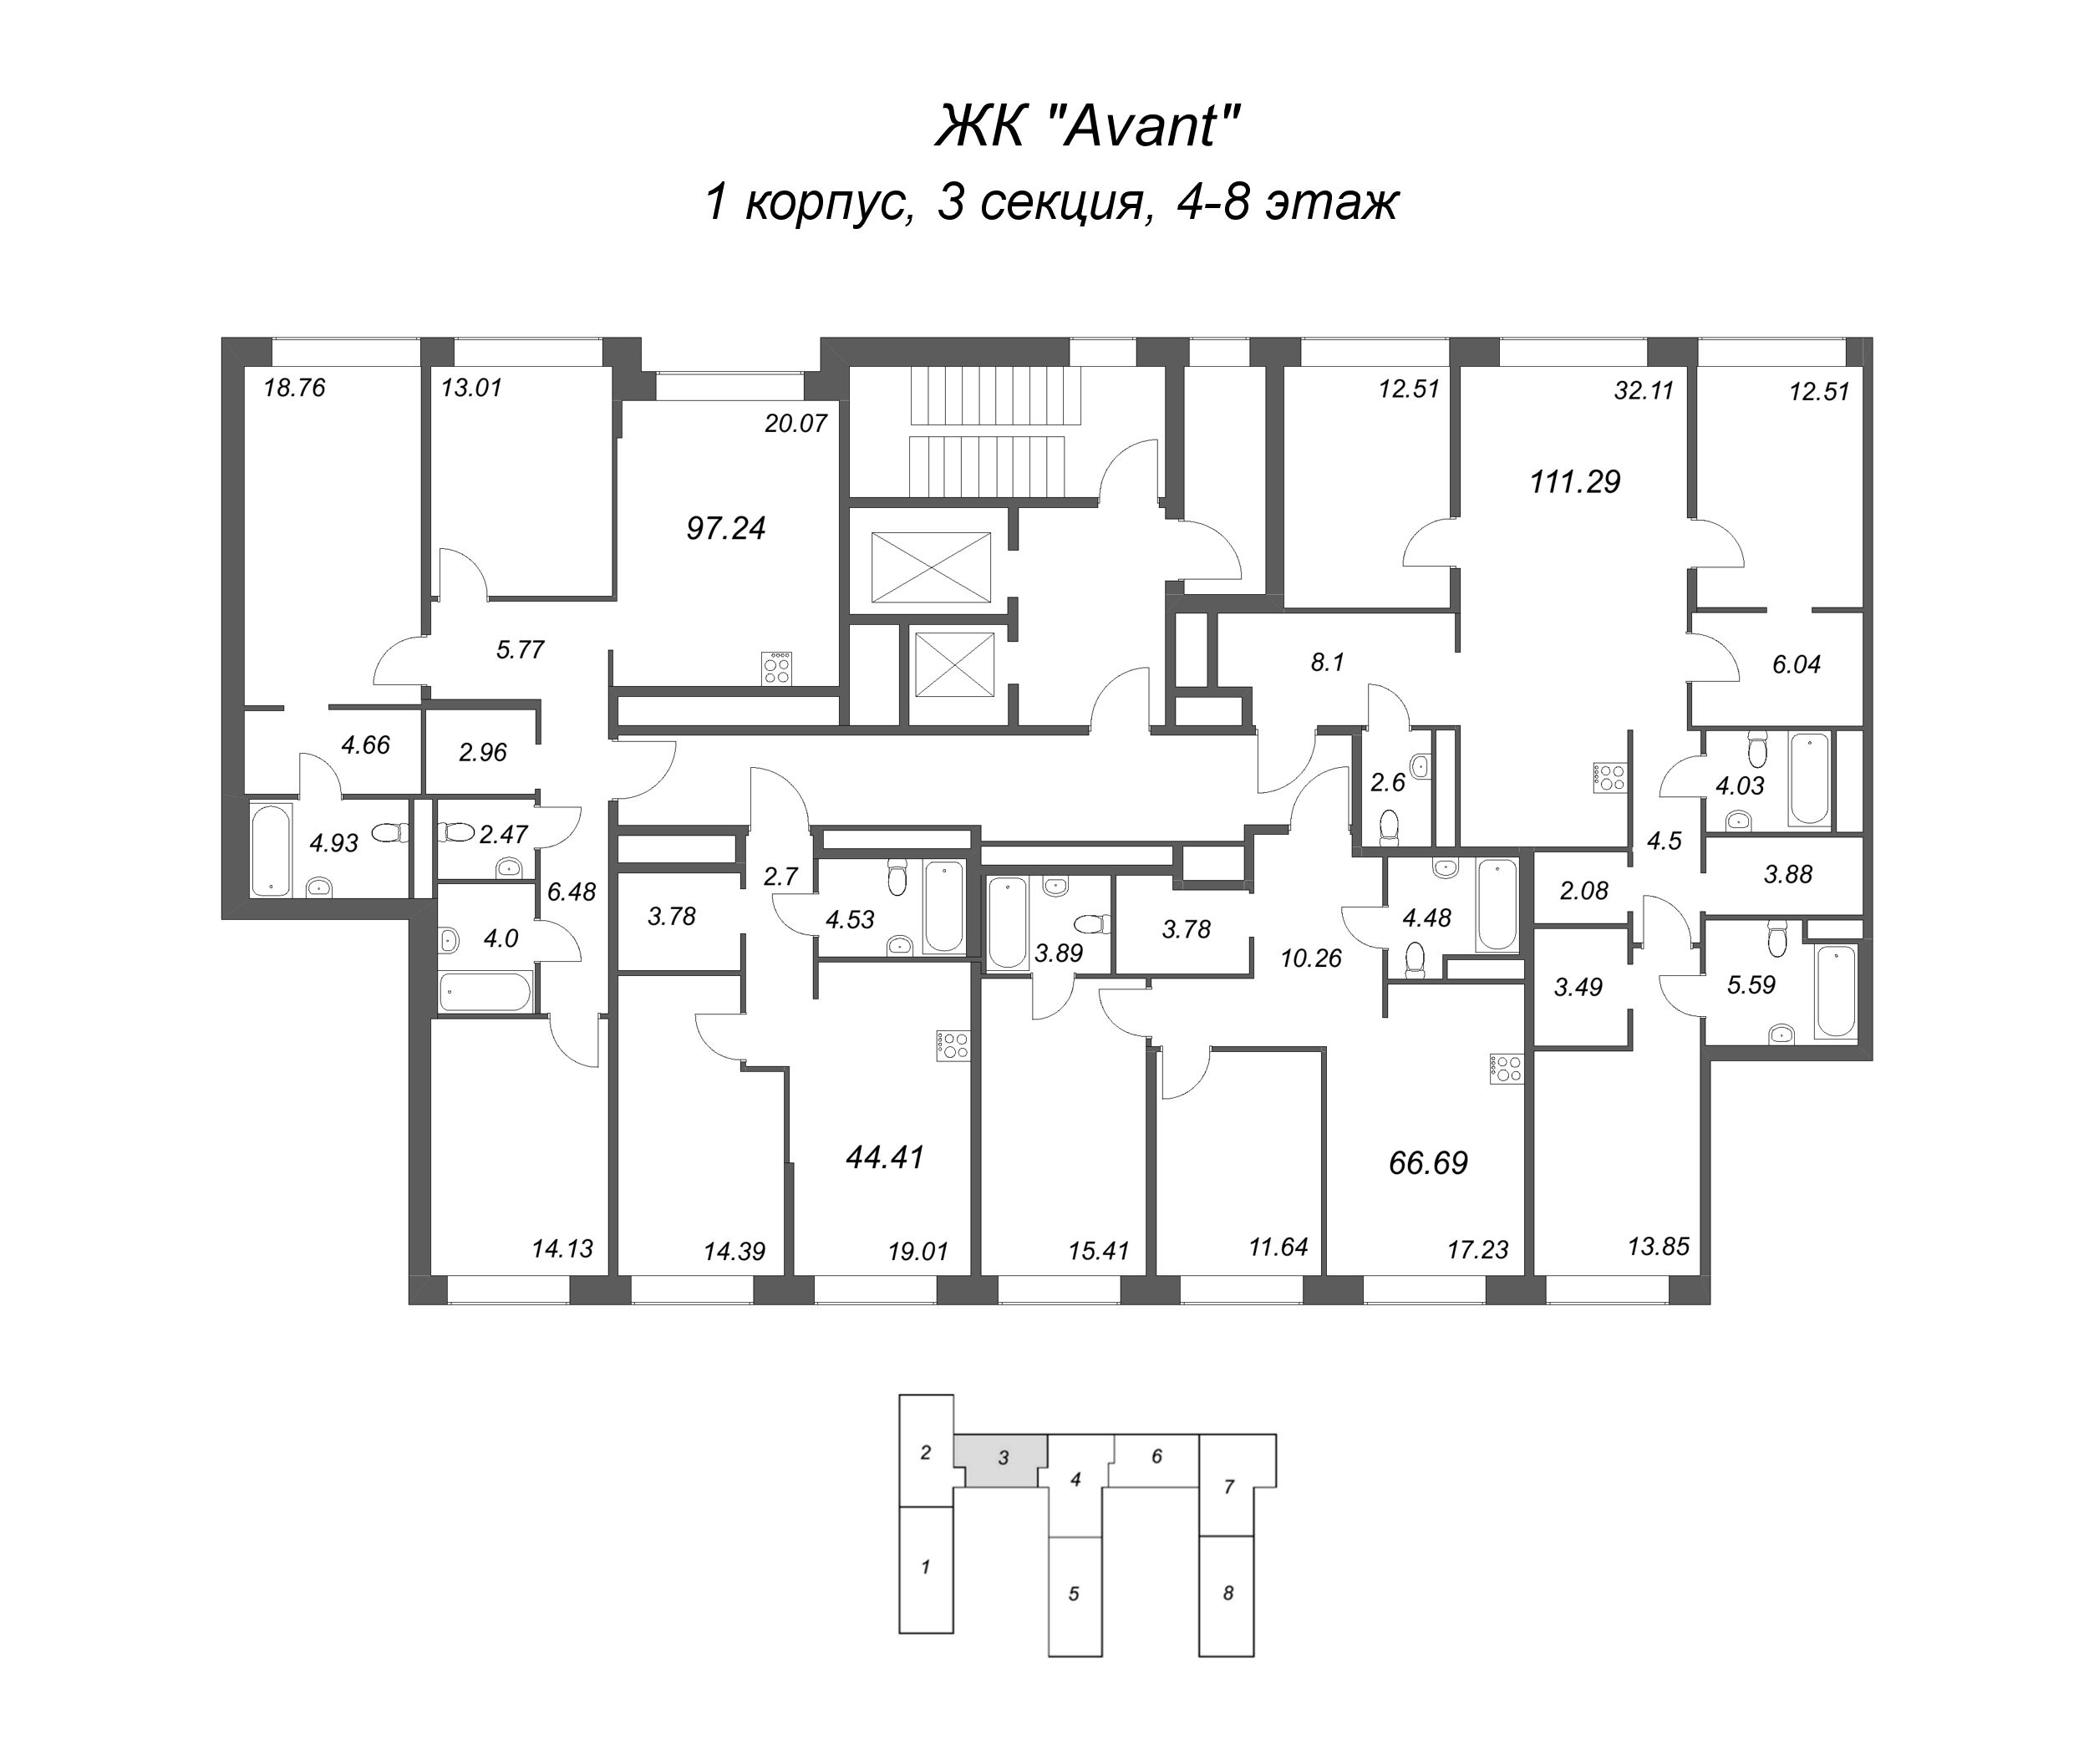 4-комнатная (Евро) квартира, 111.29 м² - планировка этажа